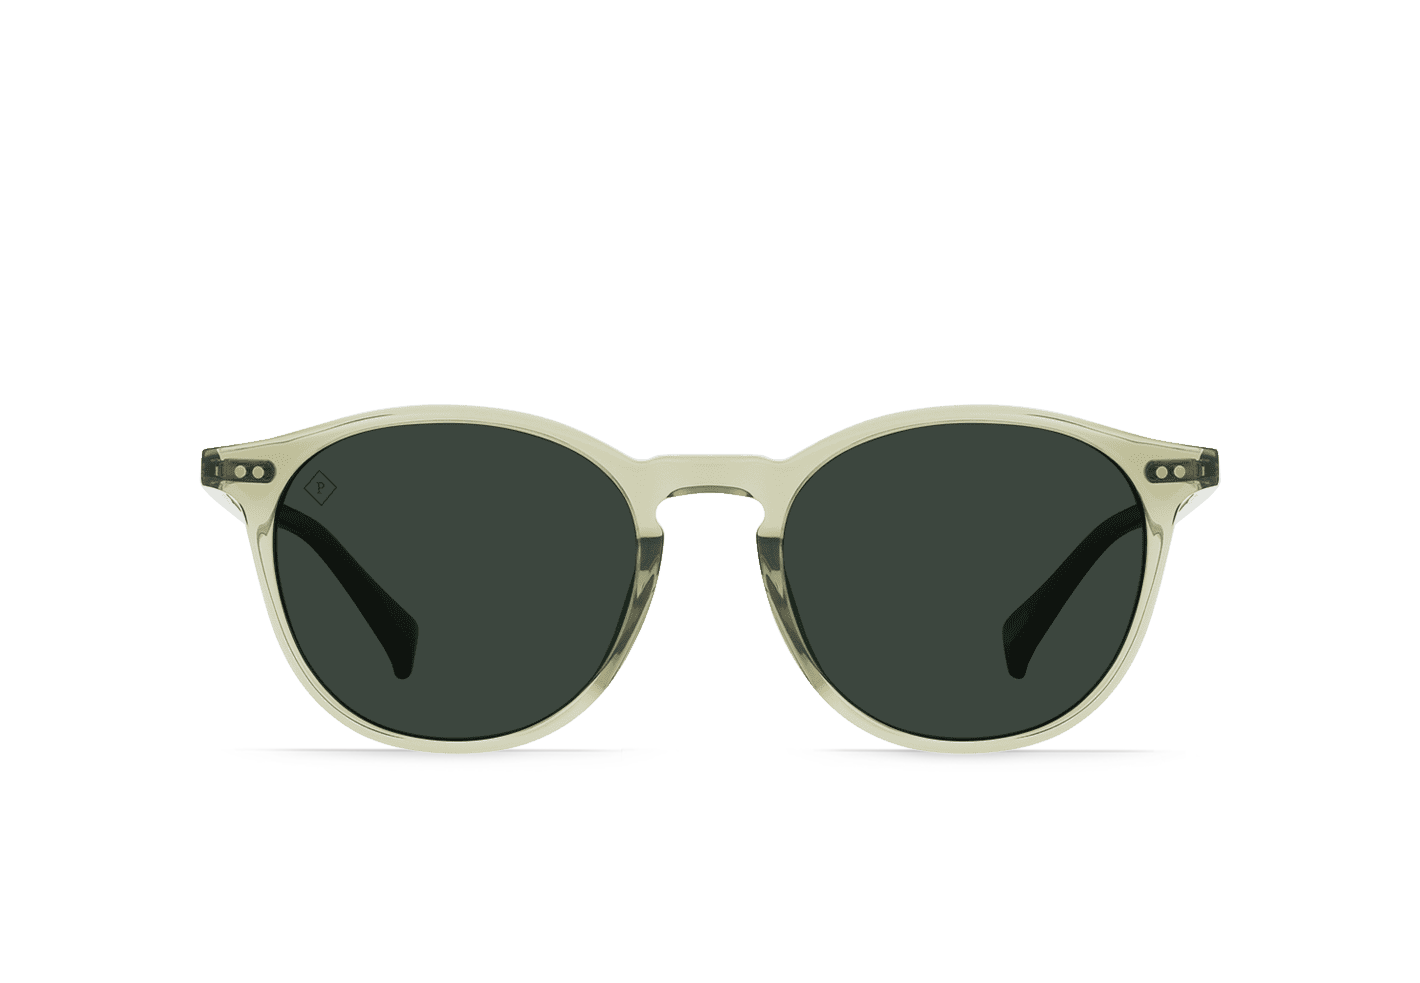 Share 87+ raen gilman sunglasses